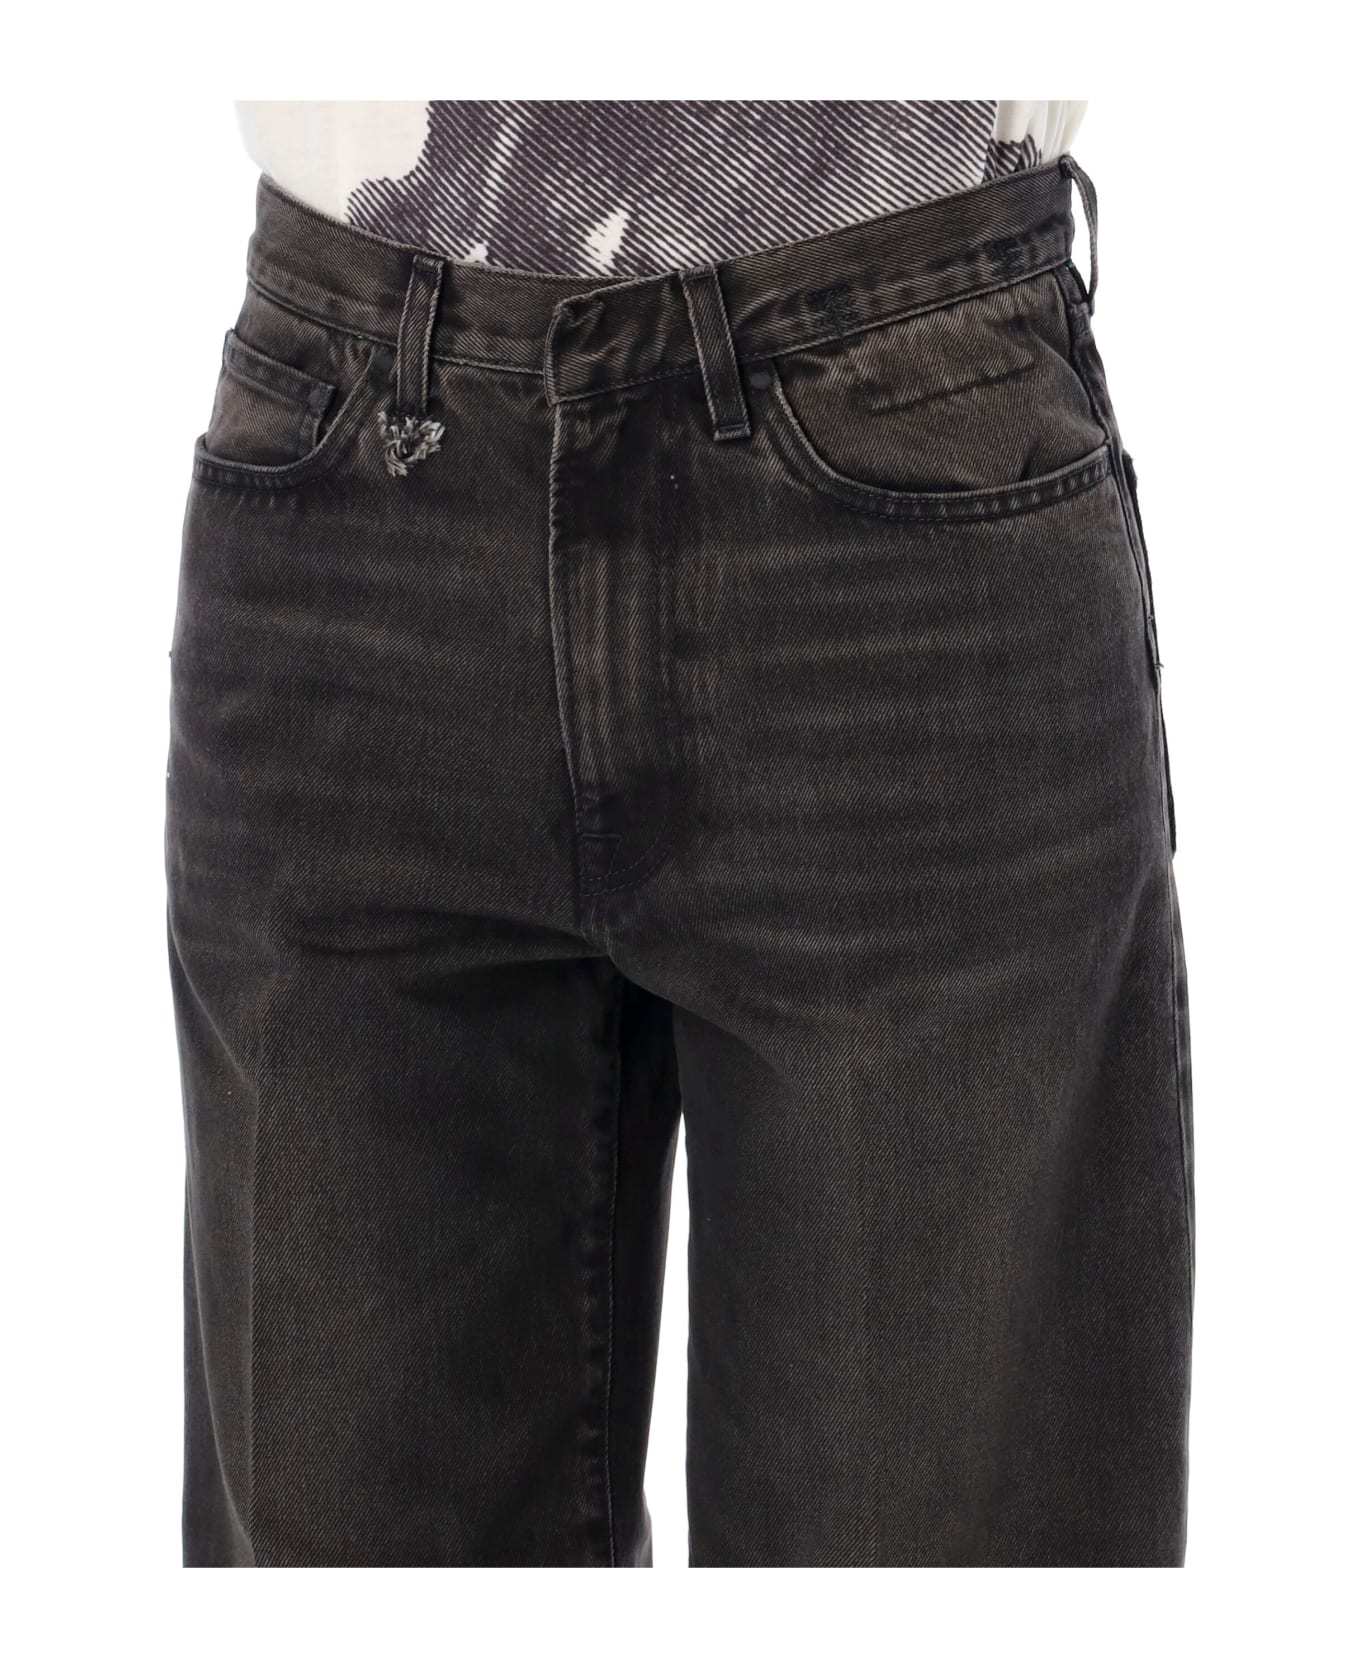 R13 Vintage Straight Jeans - VINTAGE BOY BLACK